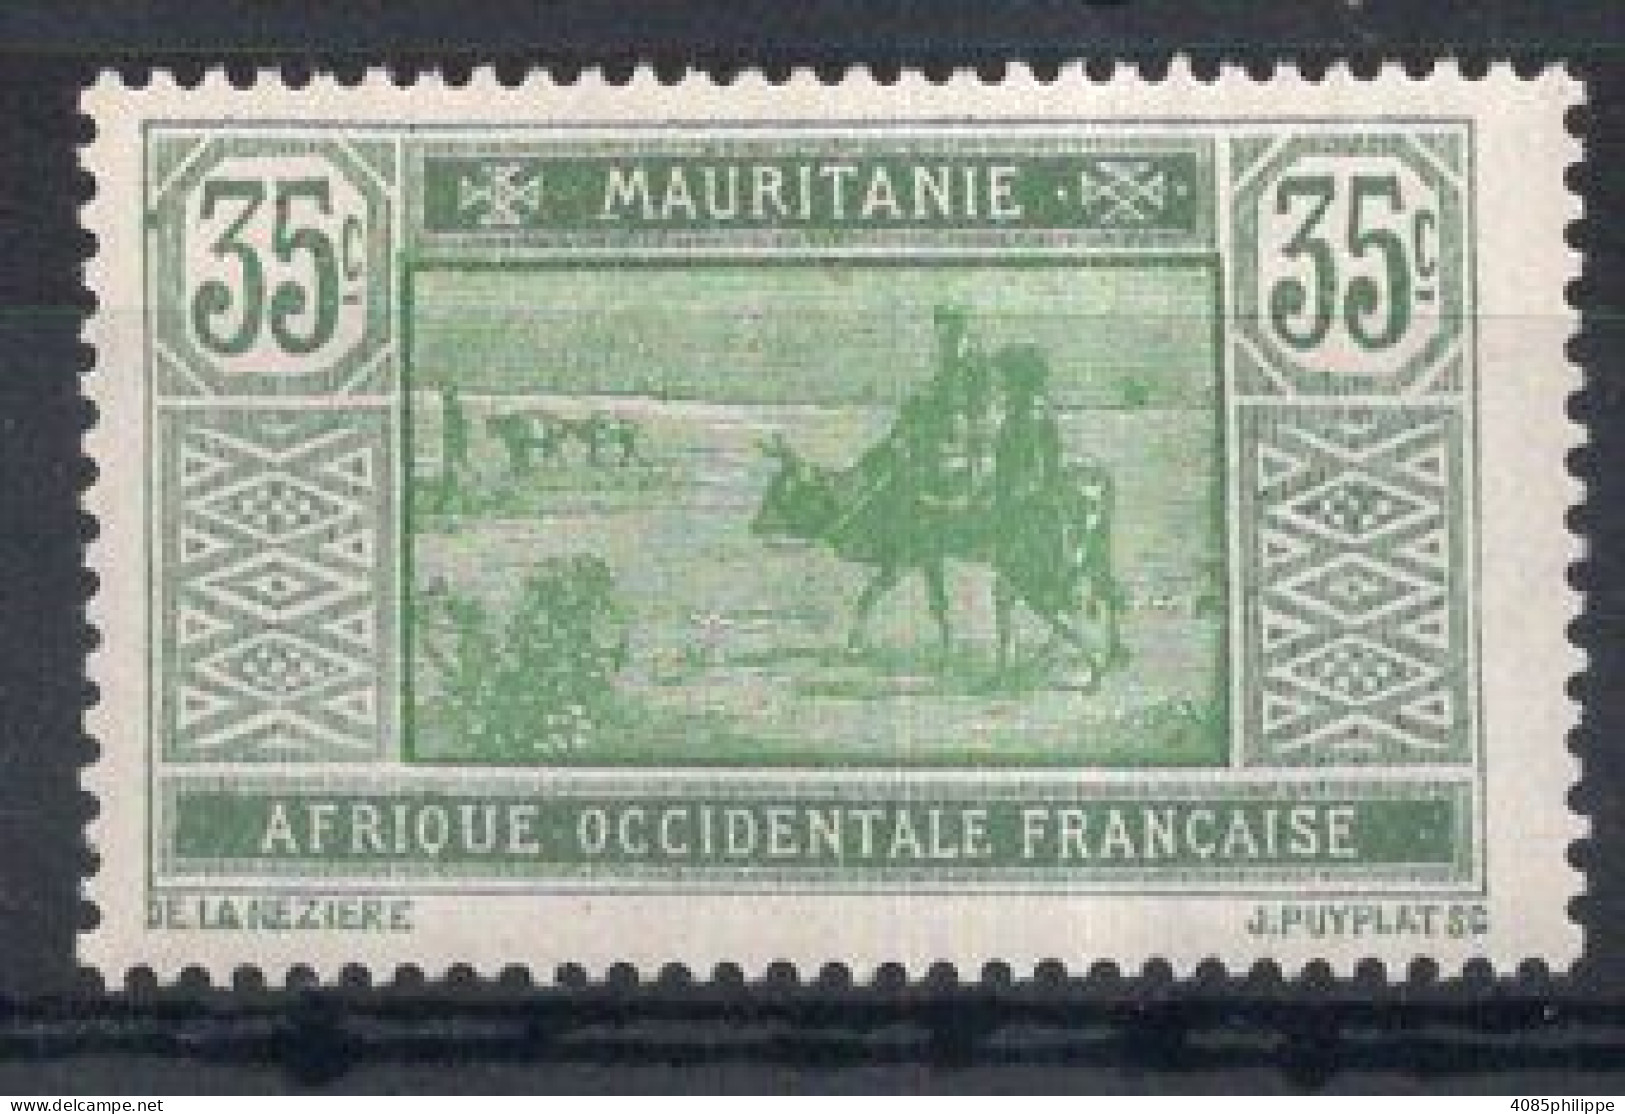 Mauritanie Timbre-poste N°57A** Neuf Sans Charnière TB Cote : 3€00 - Nuovi